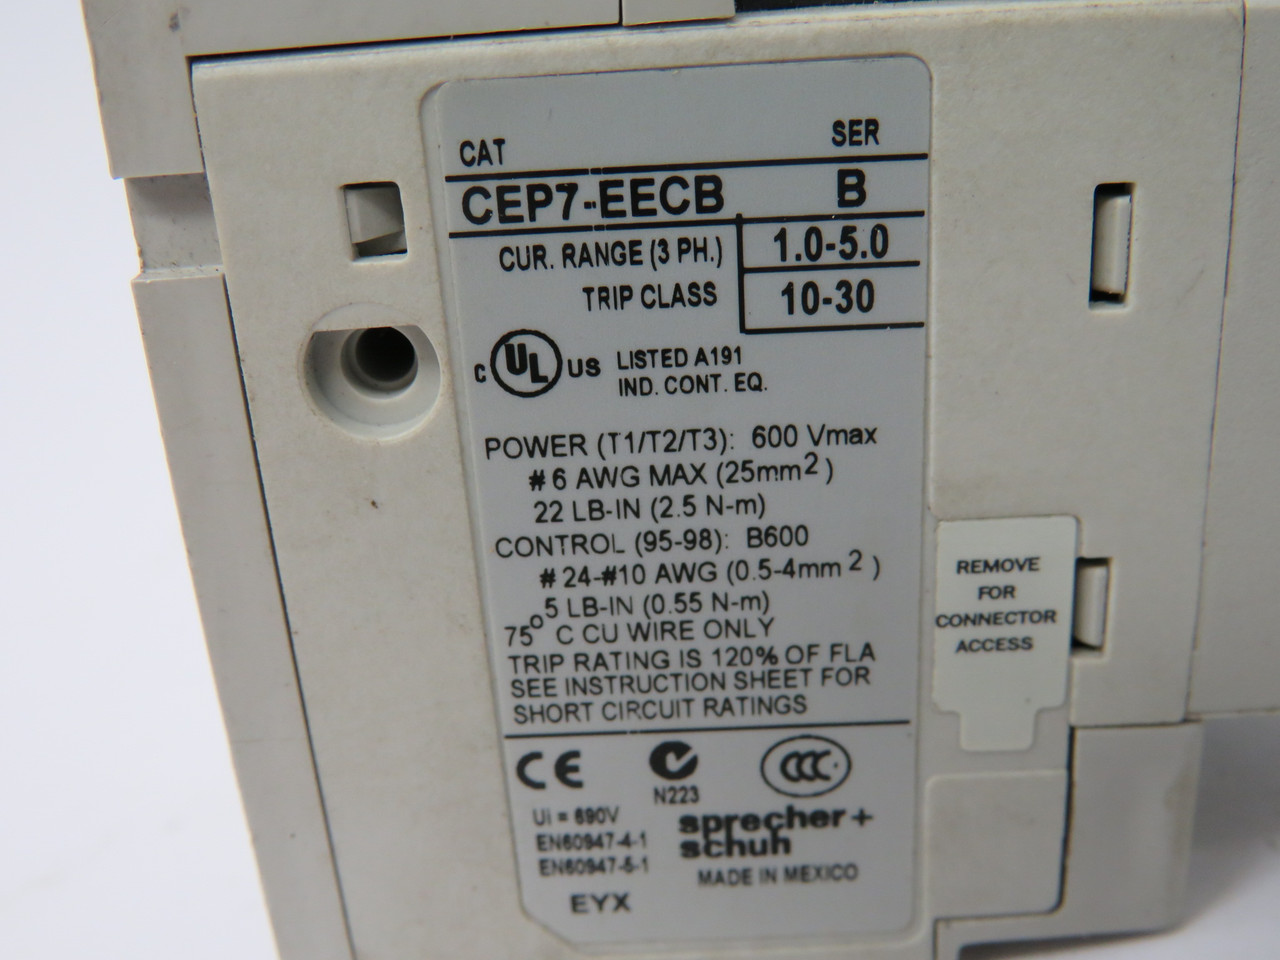 Sprecher + Schuh CEP7-EECB Series B Overload Relay 1.0-5.0 Amp USED